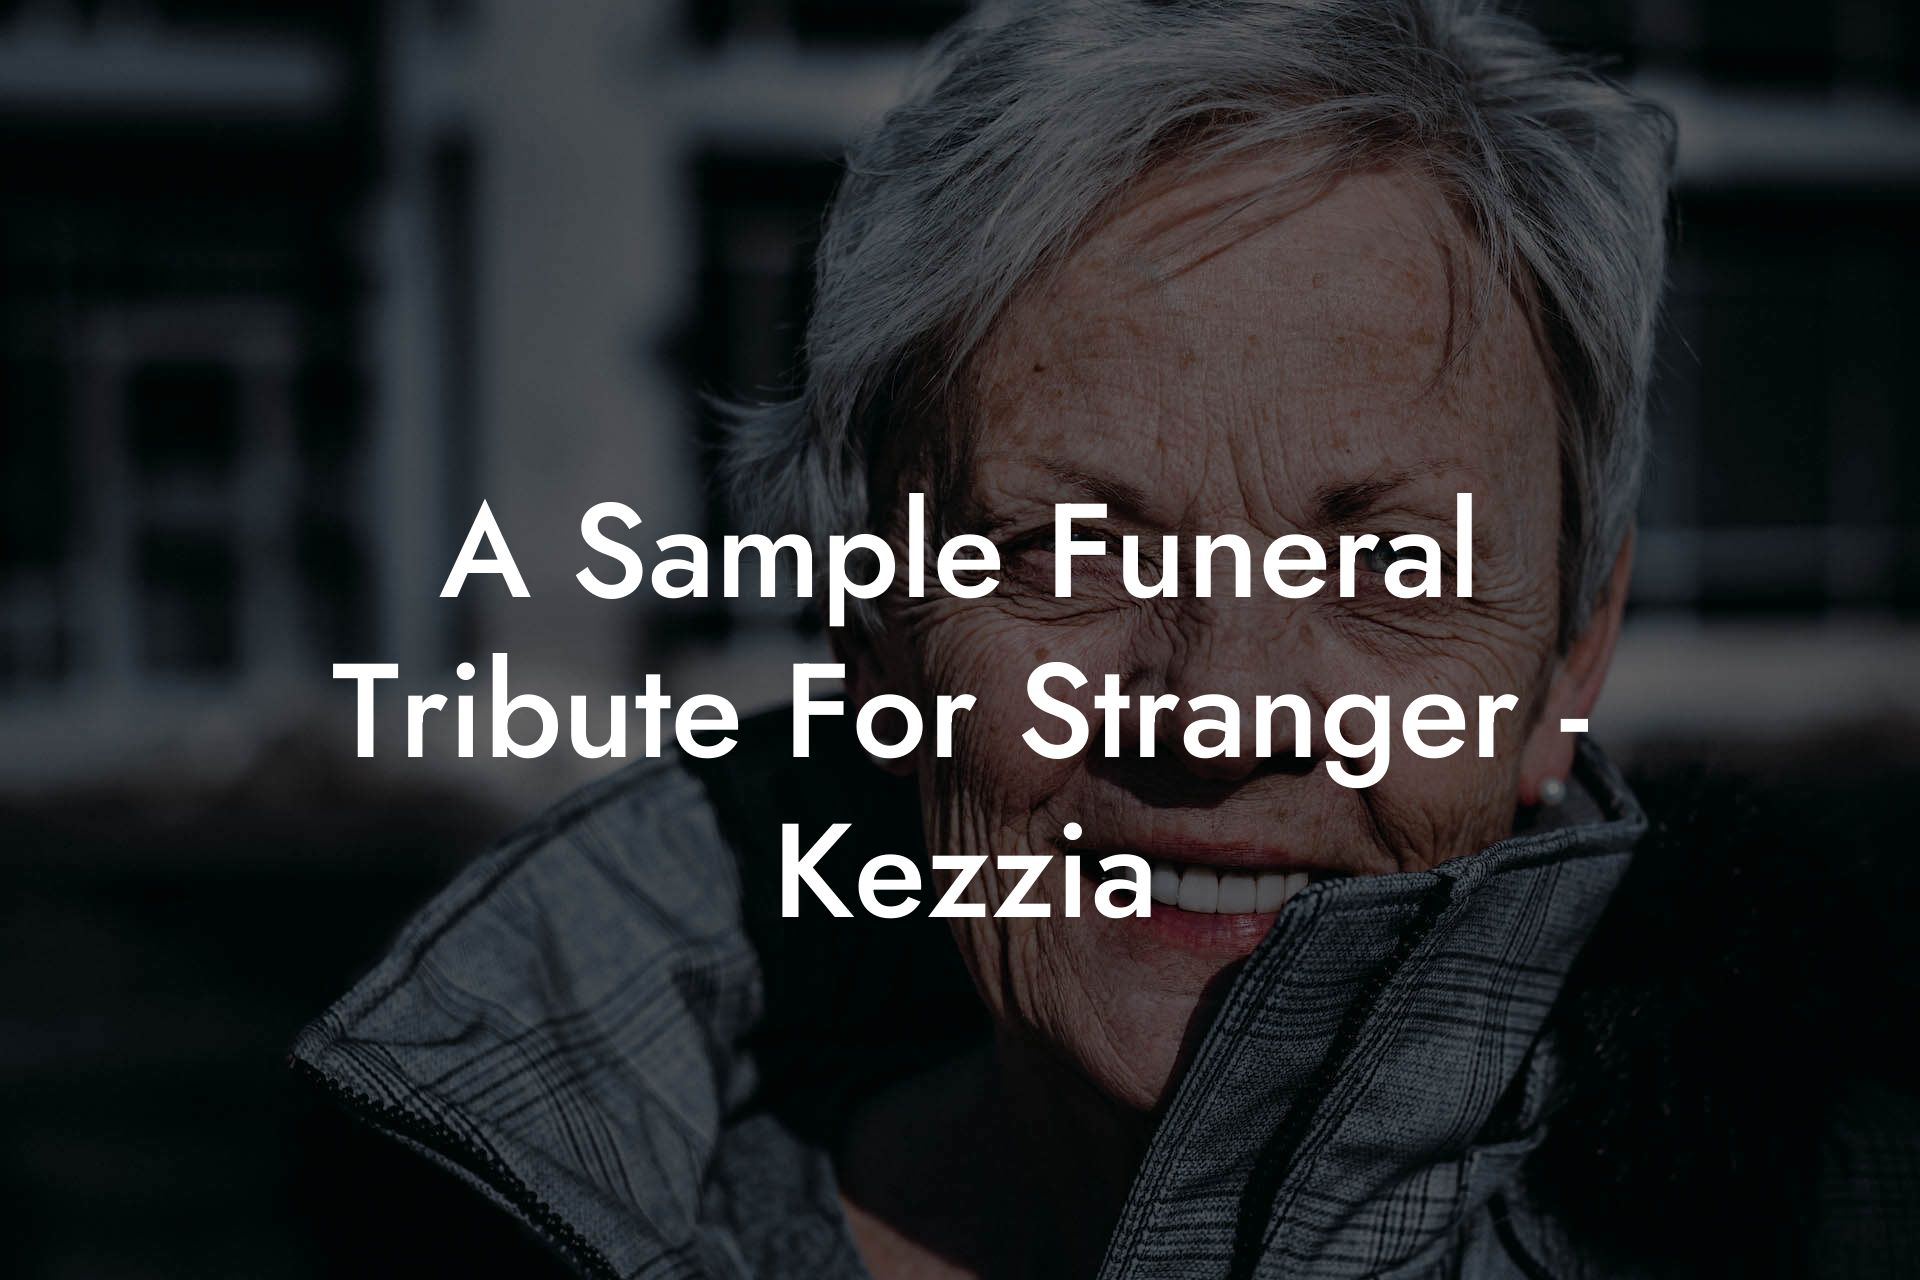 A Sample Funeral Tribute For Stranger - Kezzia